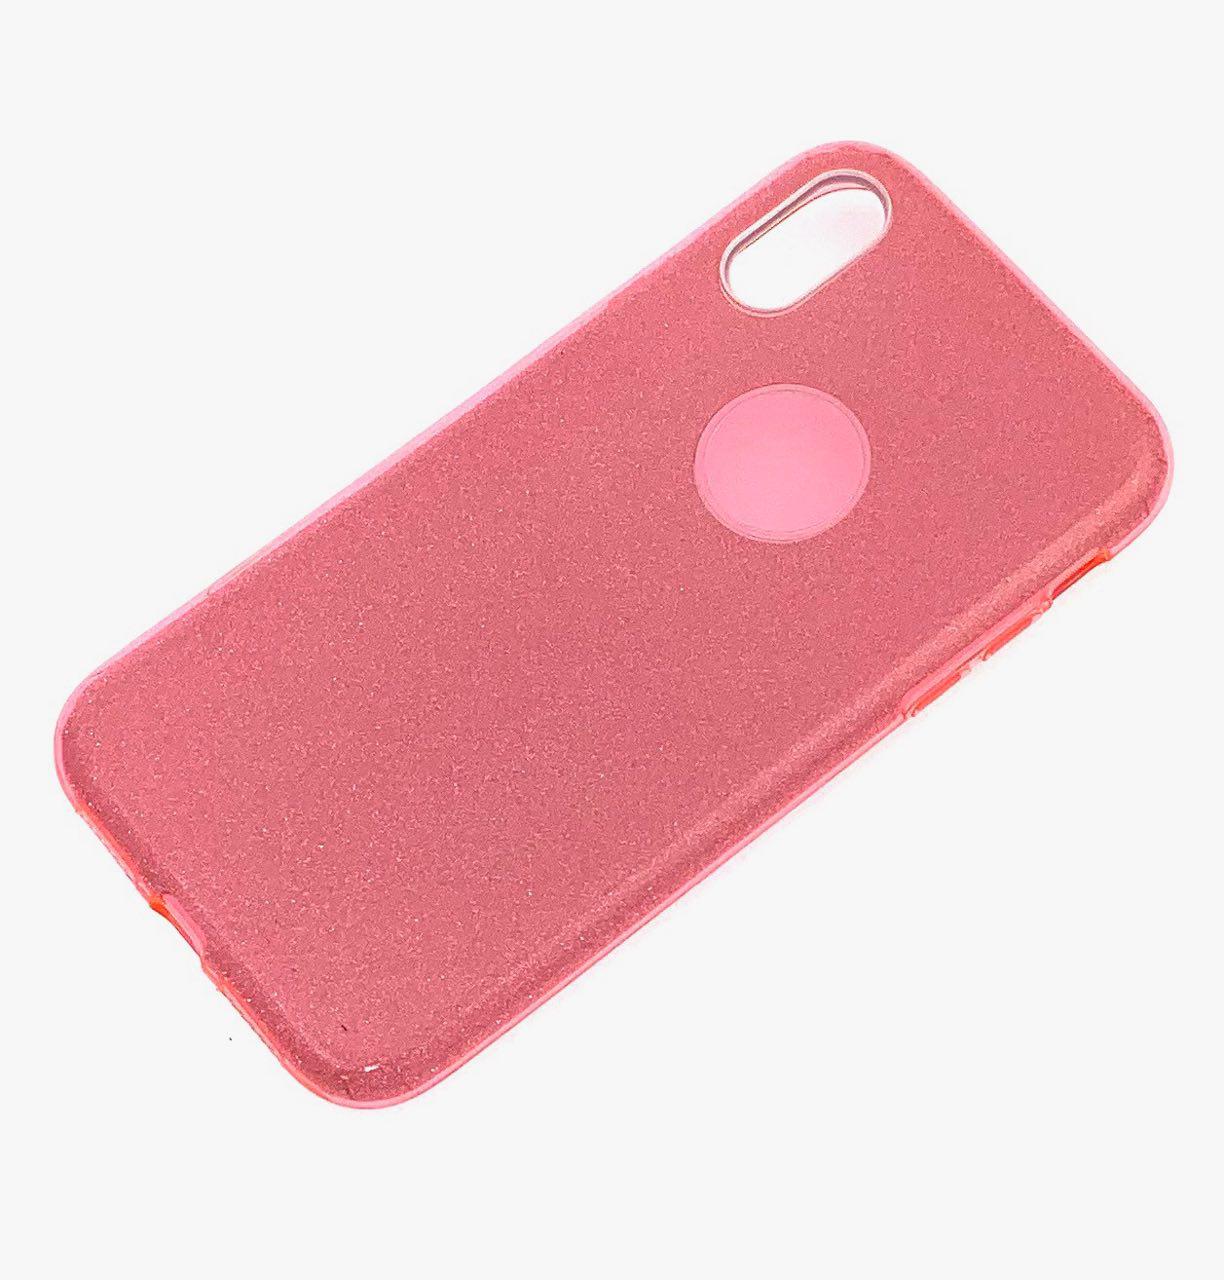 Чехол накладка Shine для APPLE iPhone XR, силикон, блестки, цвет коралловый.